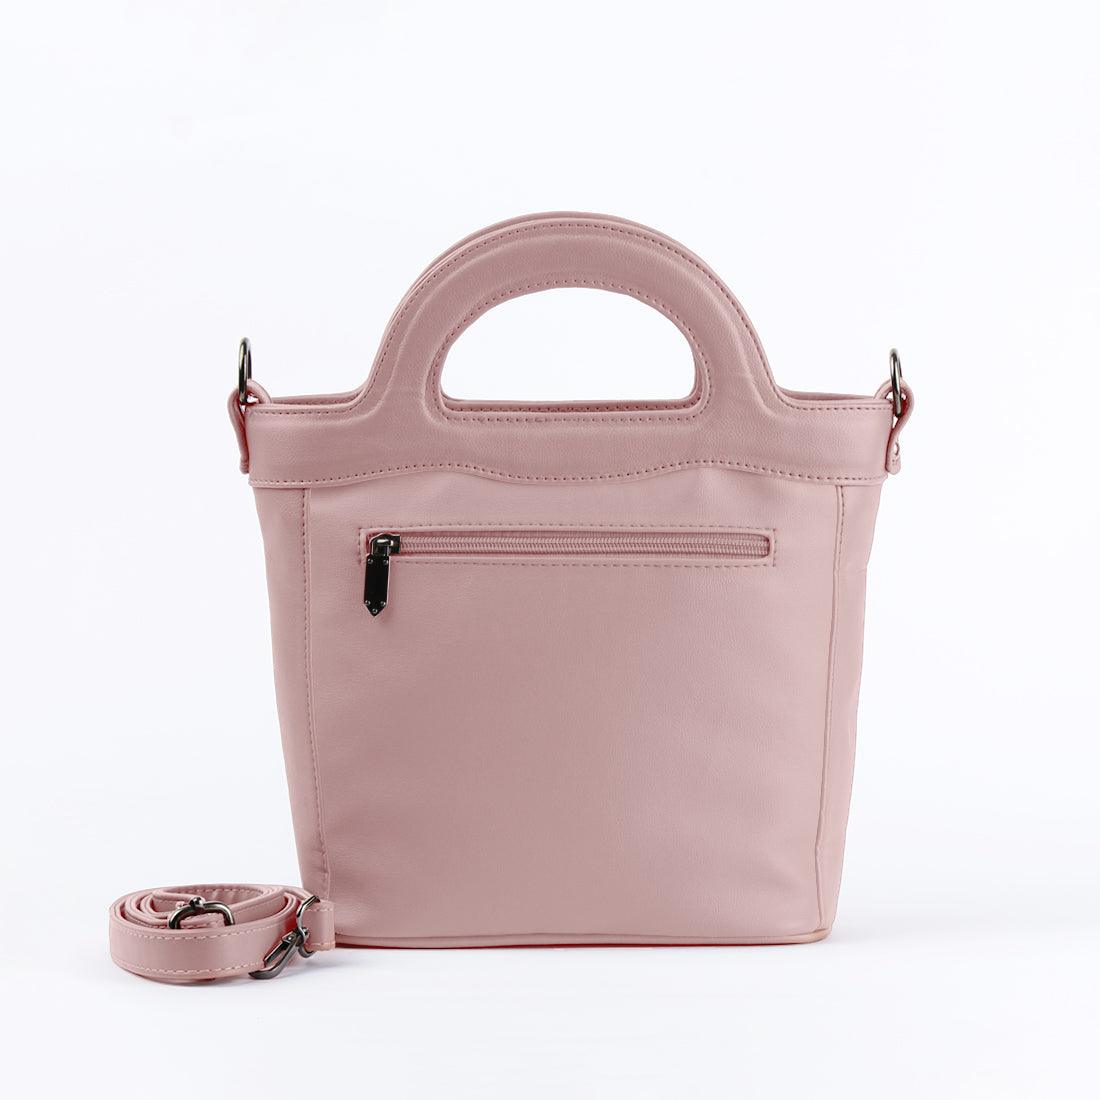 Rose Top Handle Handbag White Floral - CANVAEGYPT